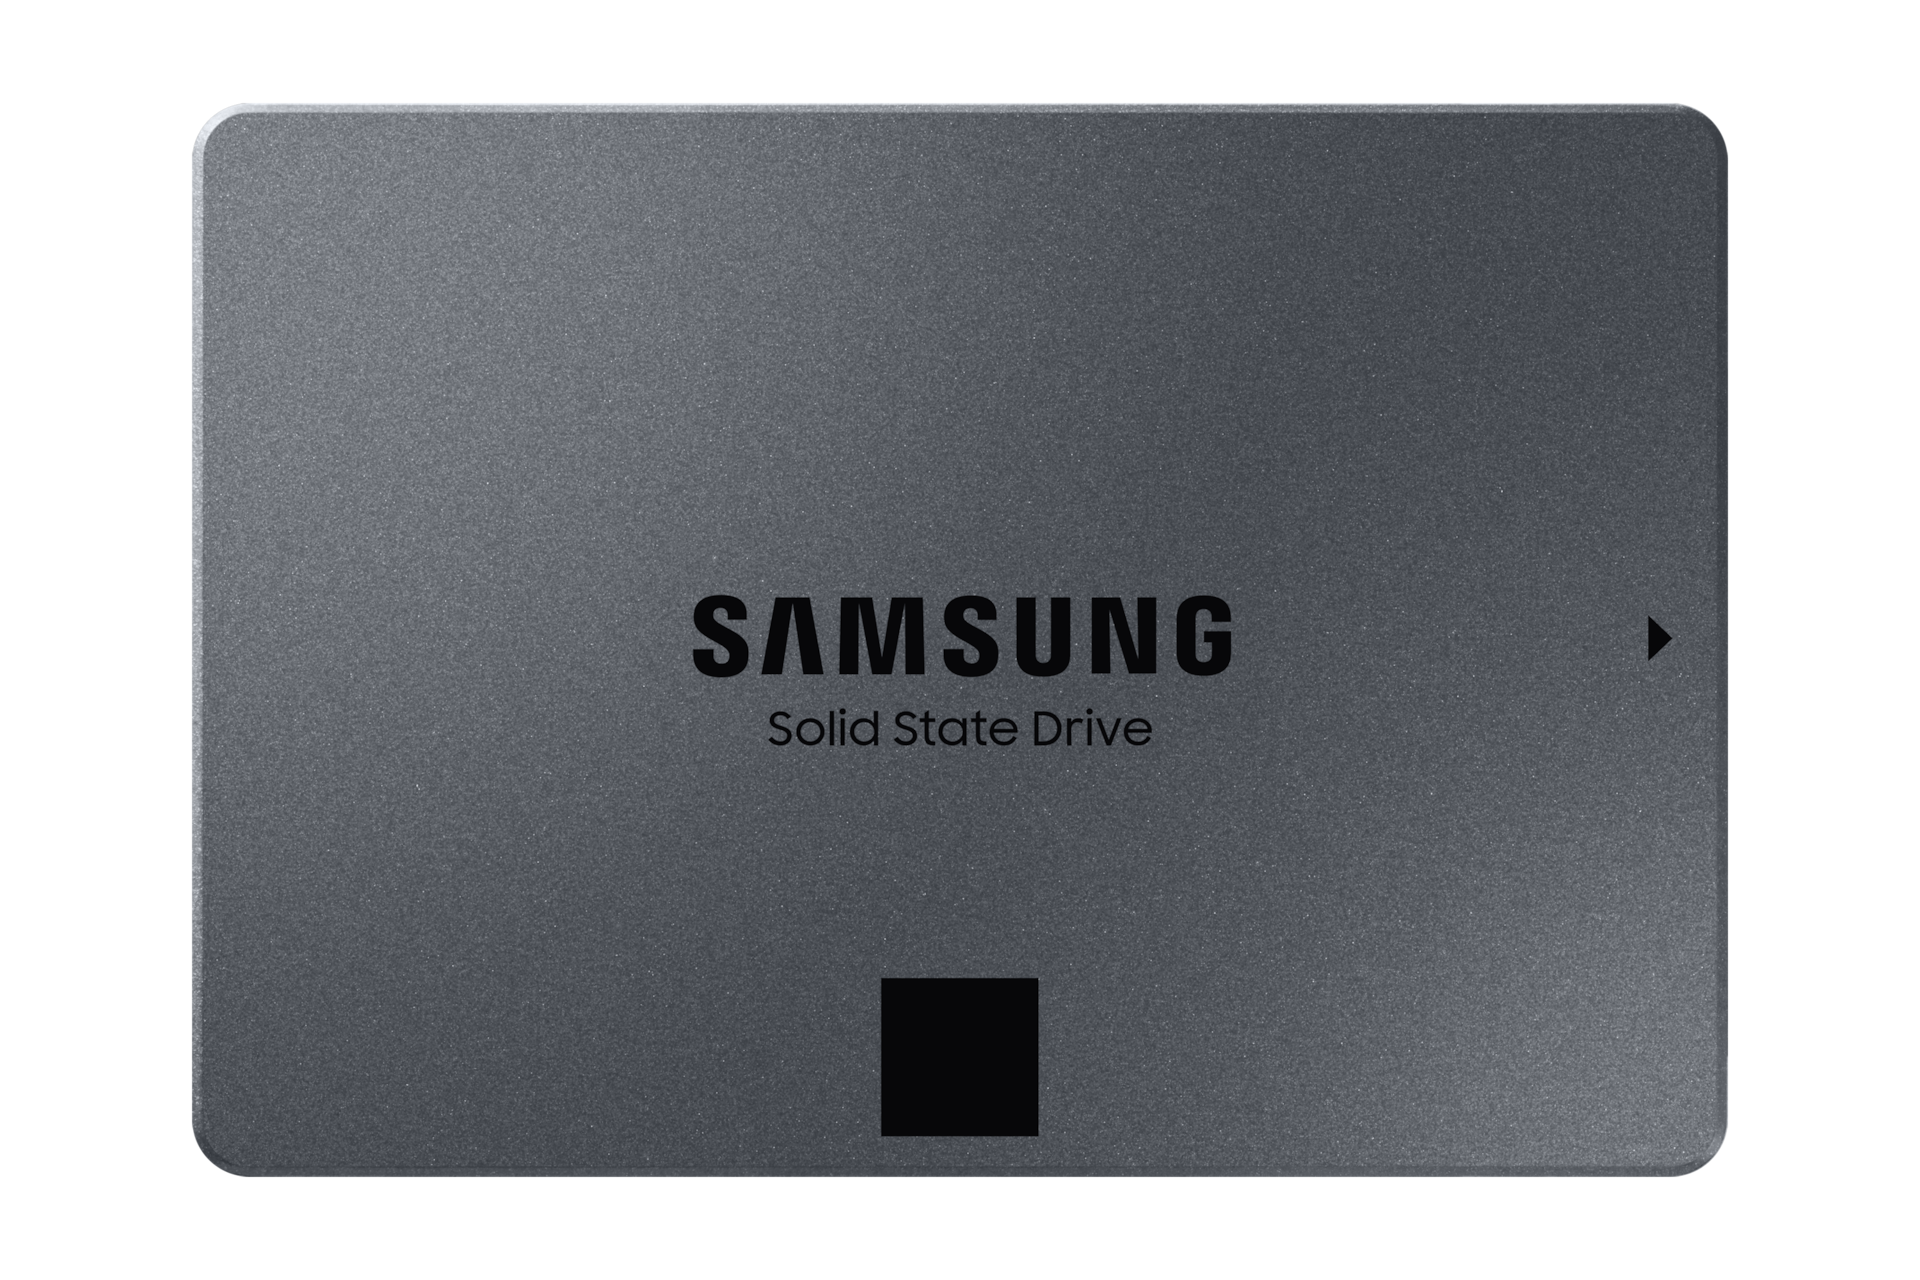 Samsung Ssd 870 qvo sata 2.5 4 tb iii 4tb discuro duro sata600 560530 mbs solido sataiii interno mz77q4t0bw 6 2.5“ mz77q4t0